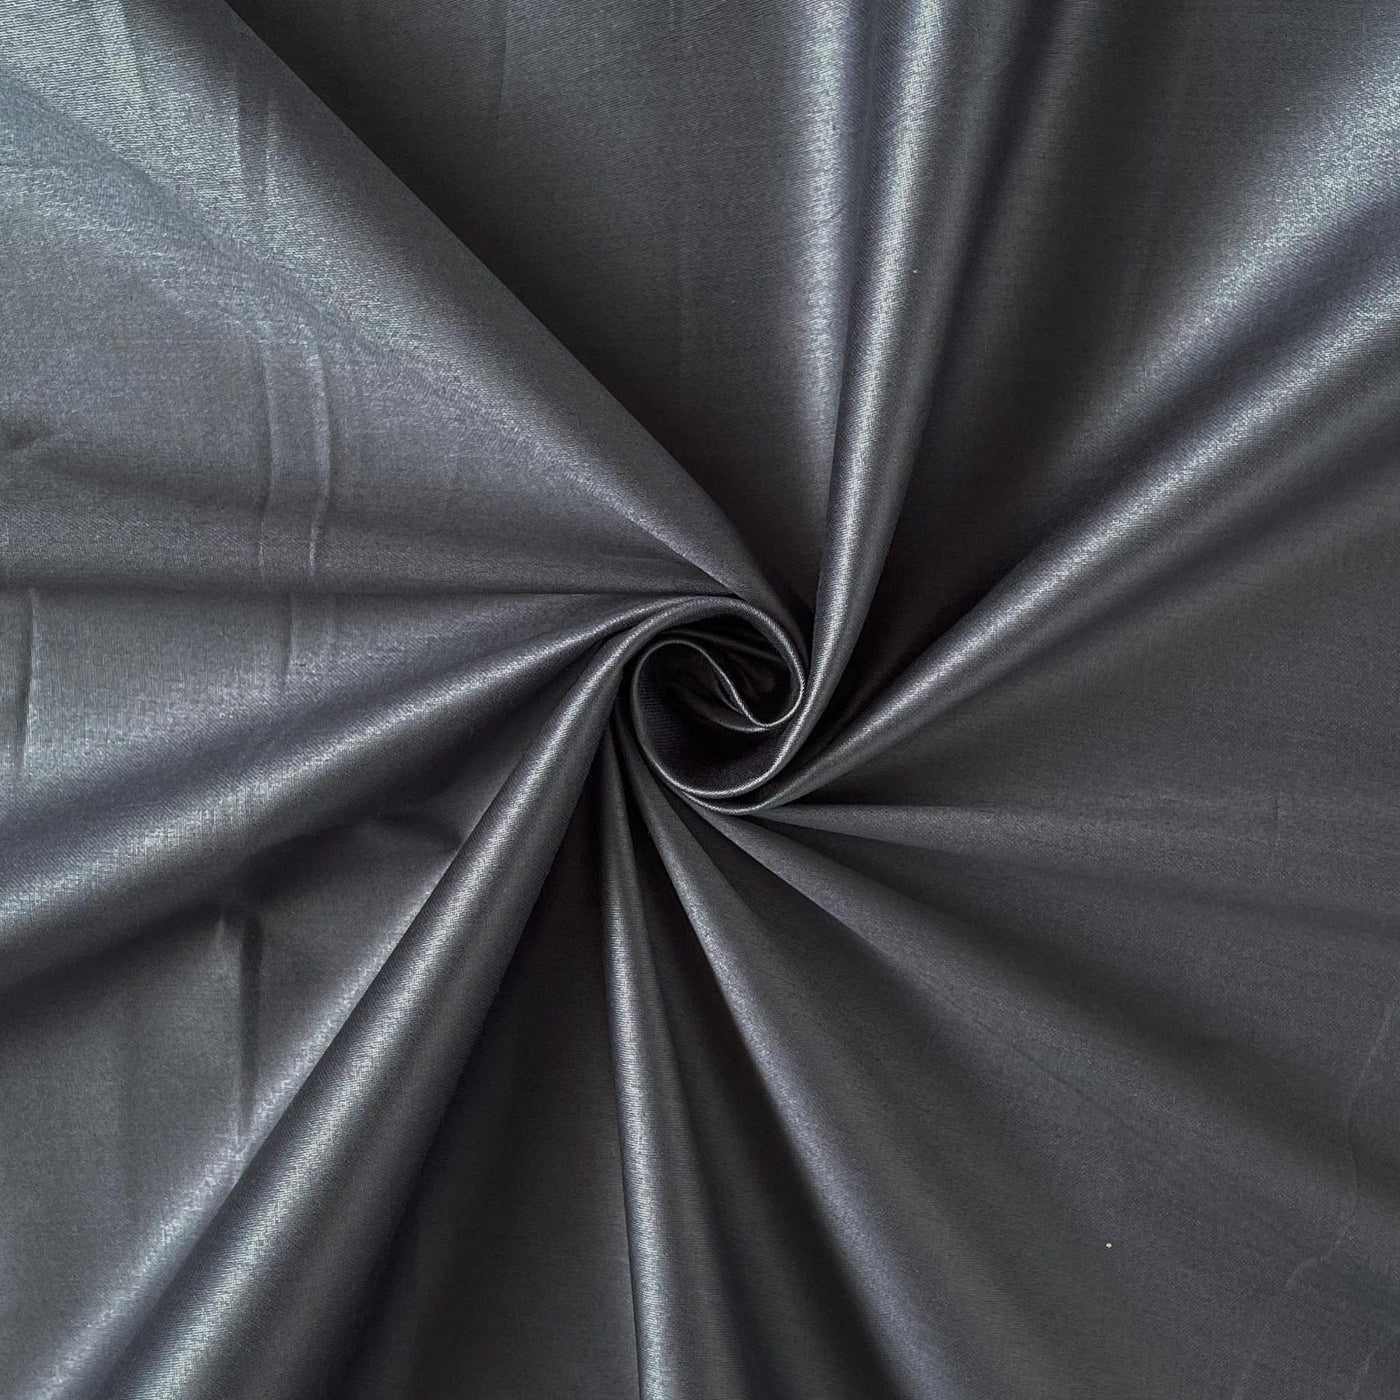 Fabric Pandit Fabric Dark Grey Plain Cotton Satin Fabric (Width 42 Inches)